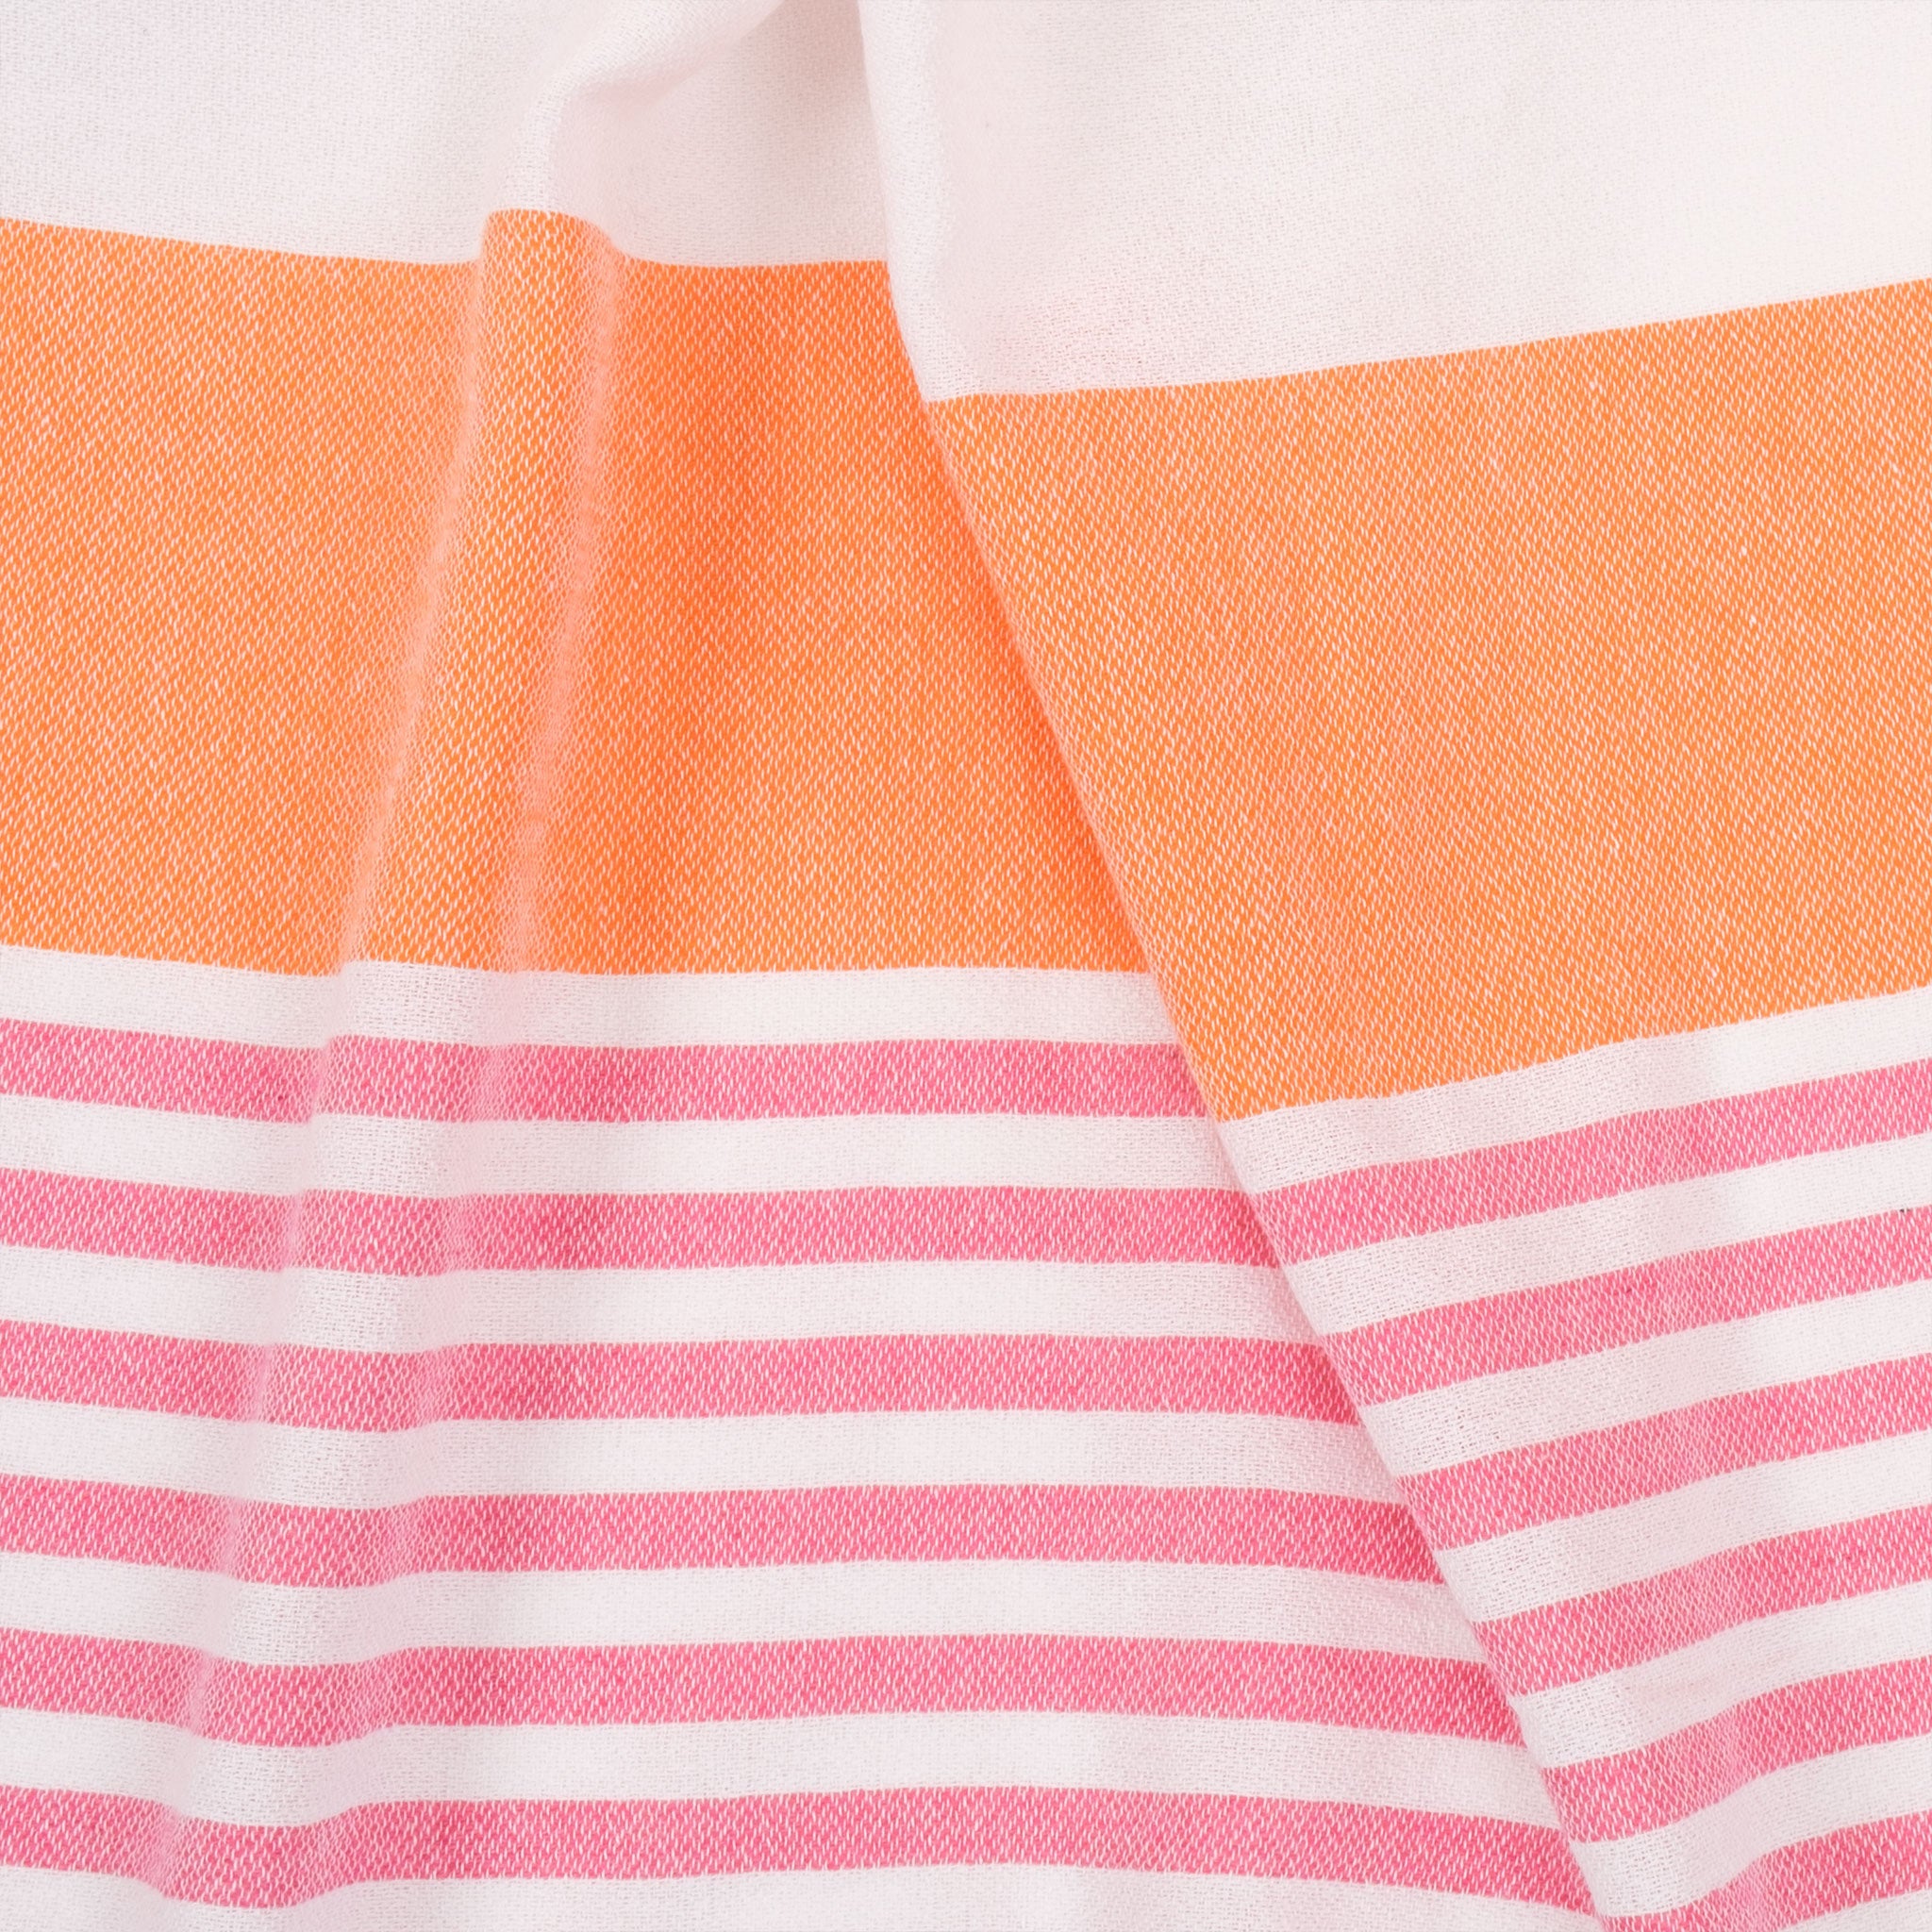 American Soft Linen - 100% Cotton Turkish Peshtemal Towels 40x70 Inches - Pink - 2